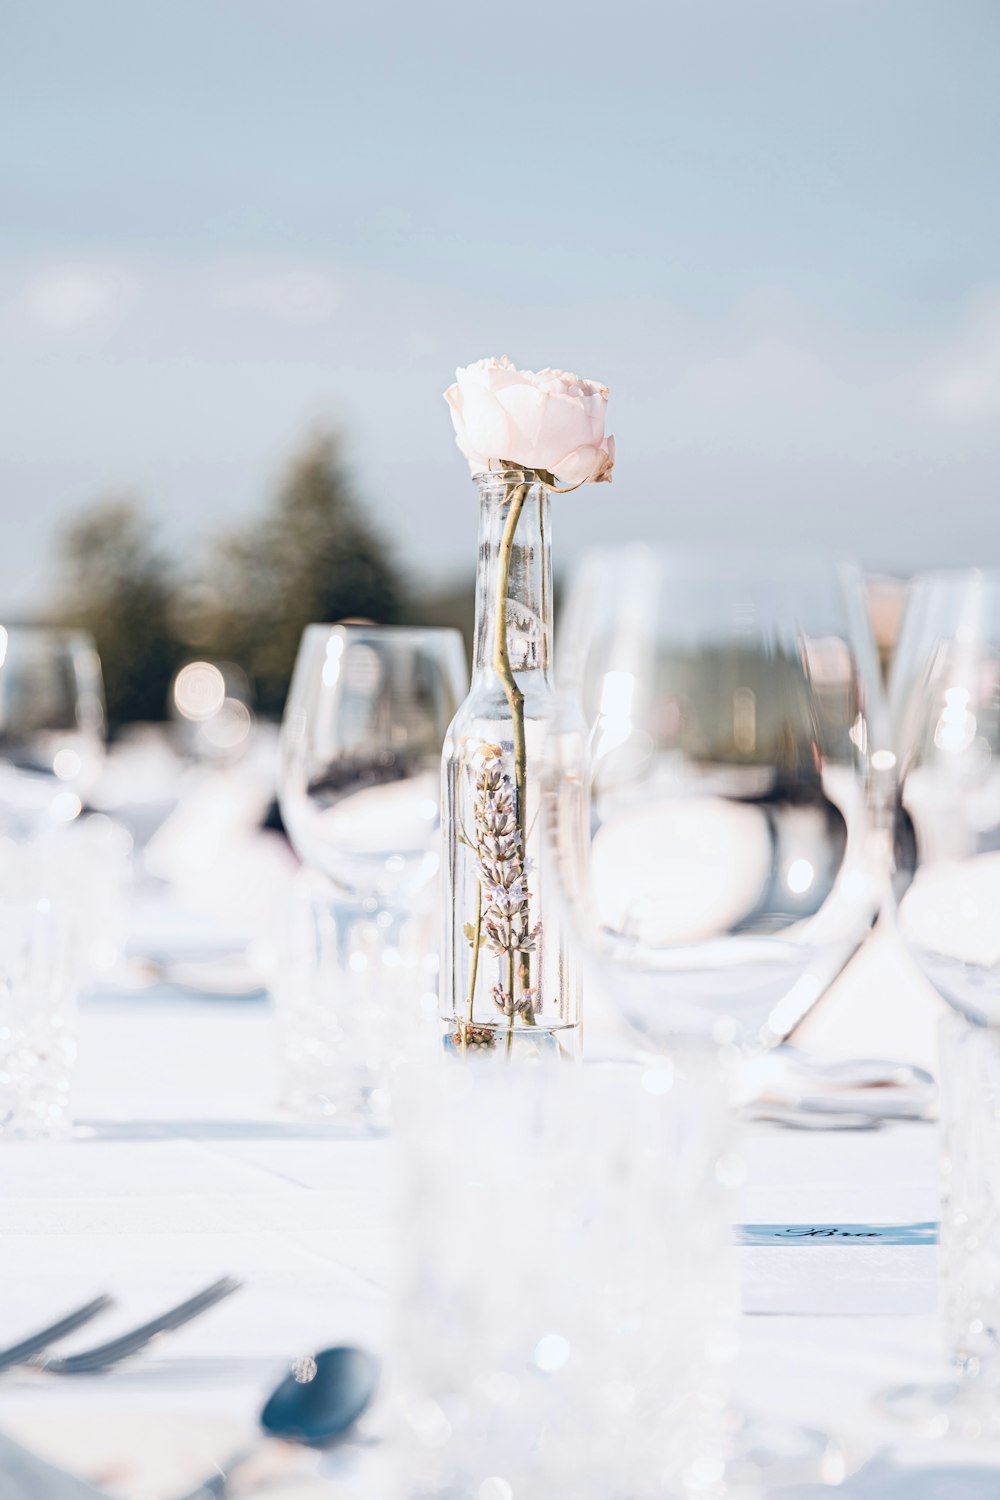 white rose in glass bottle on table